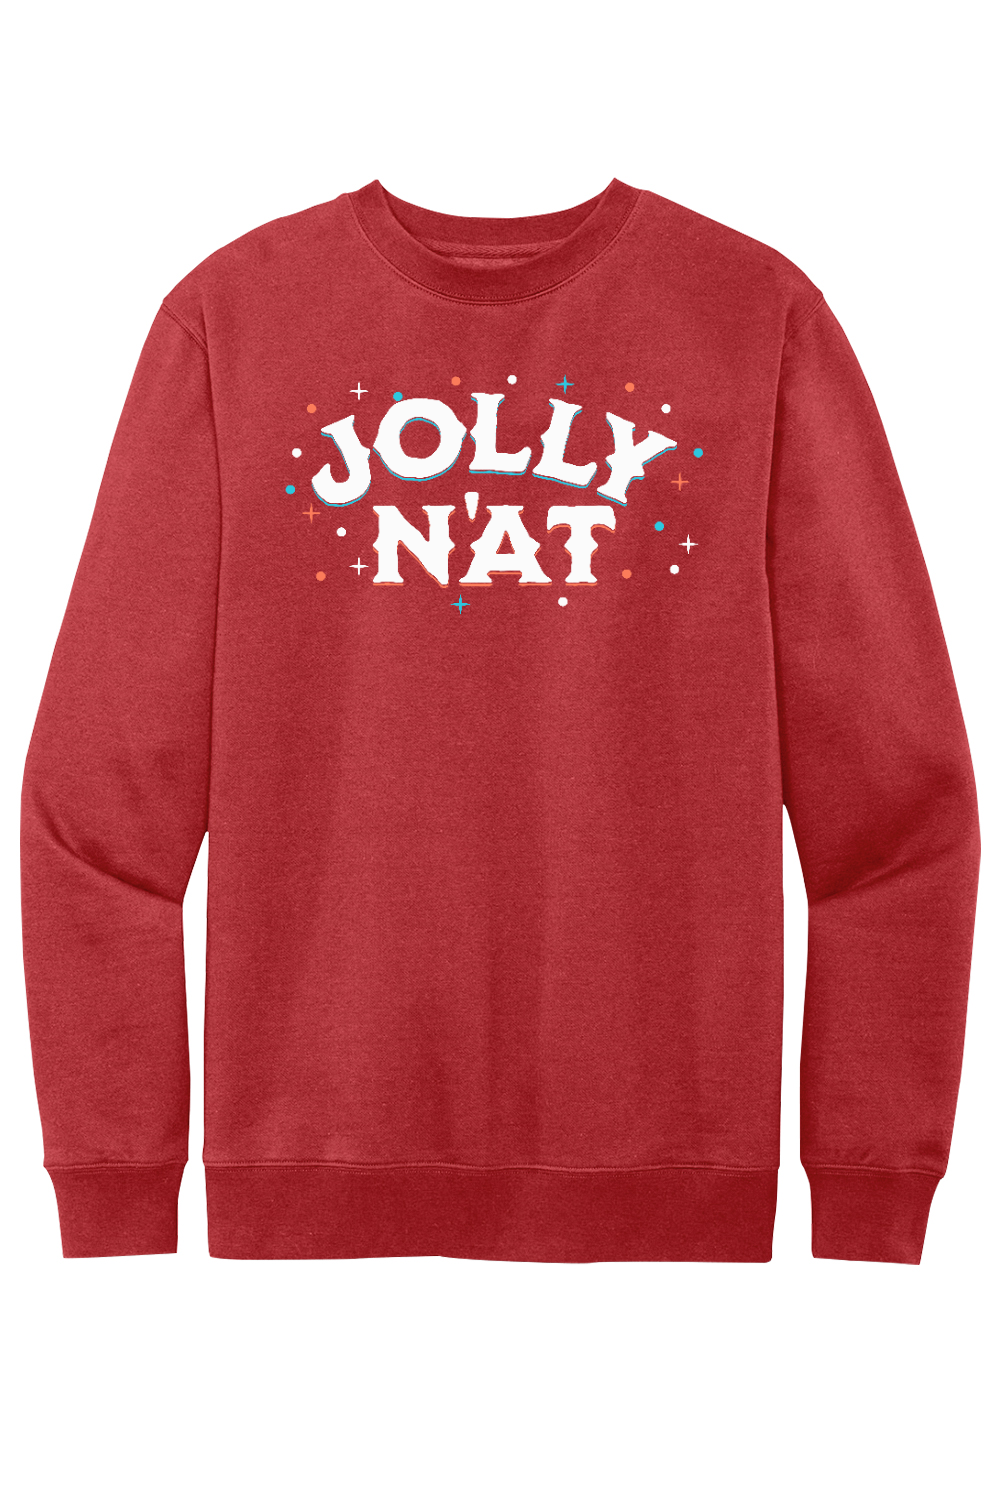 Jolly N'at - Fleece Crew Sweatshirt - Yinzylvania